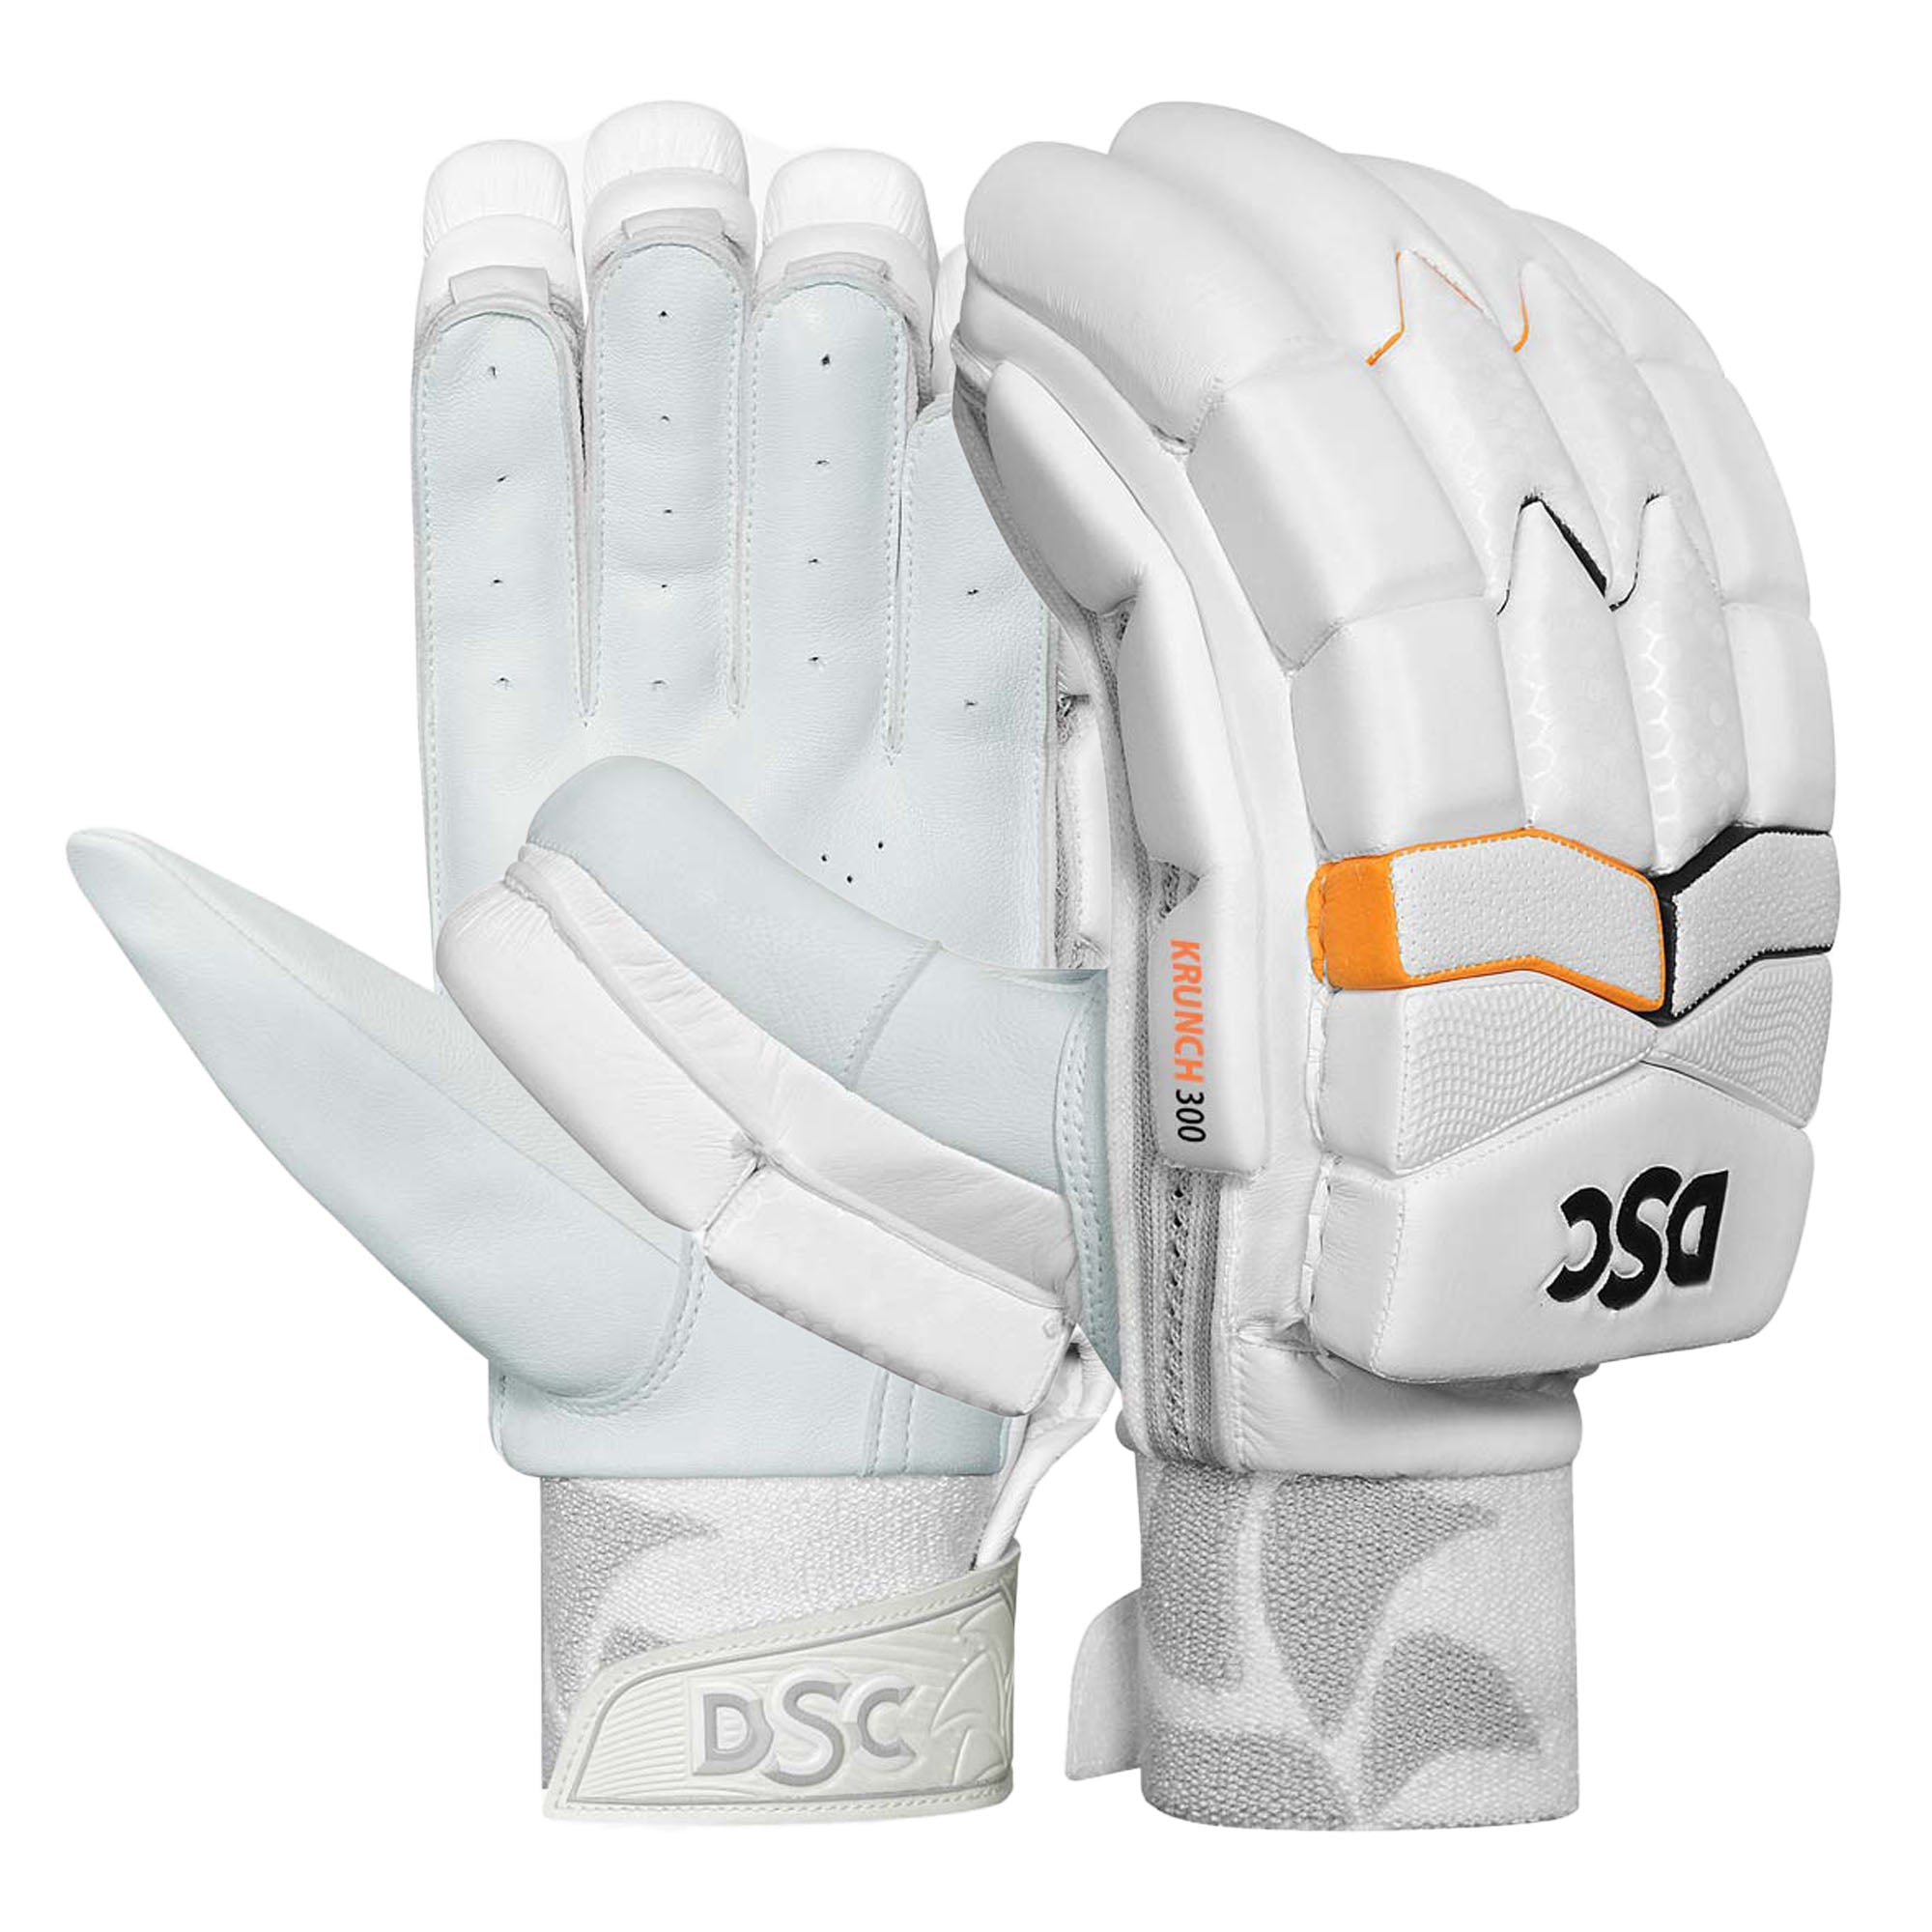 DSC KRUNCH 300 Cricket Batting Gloves